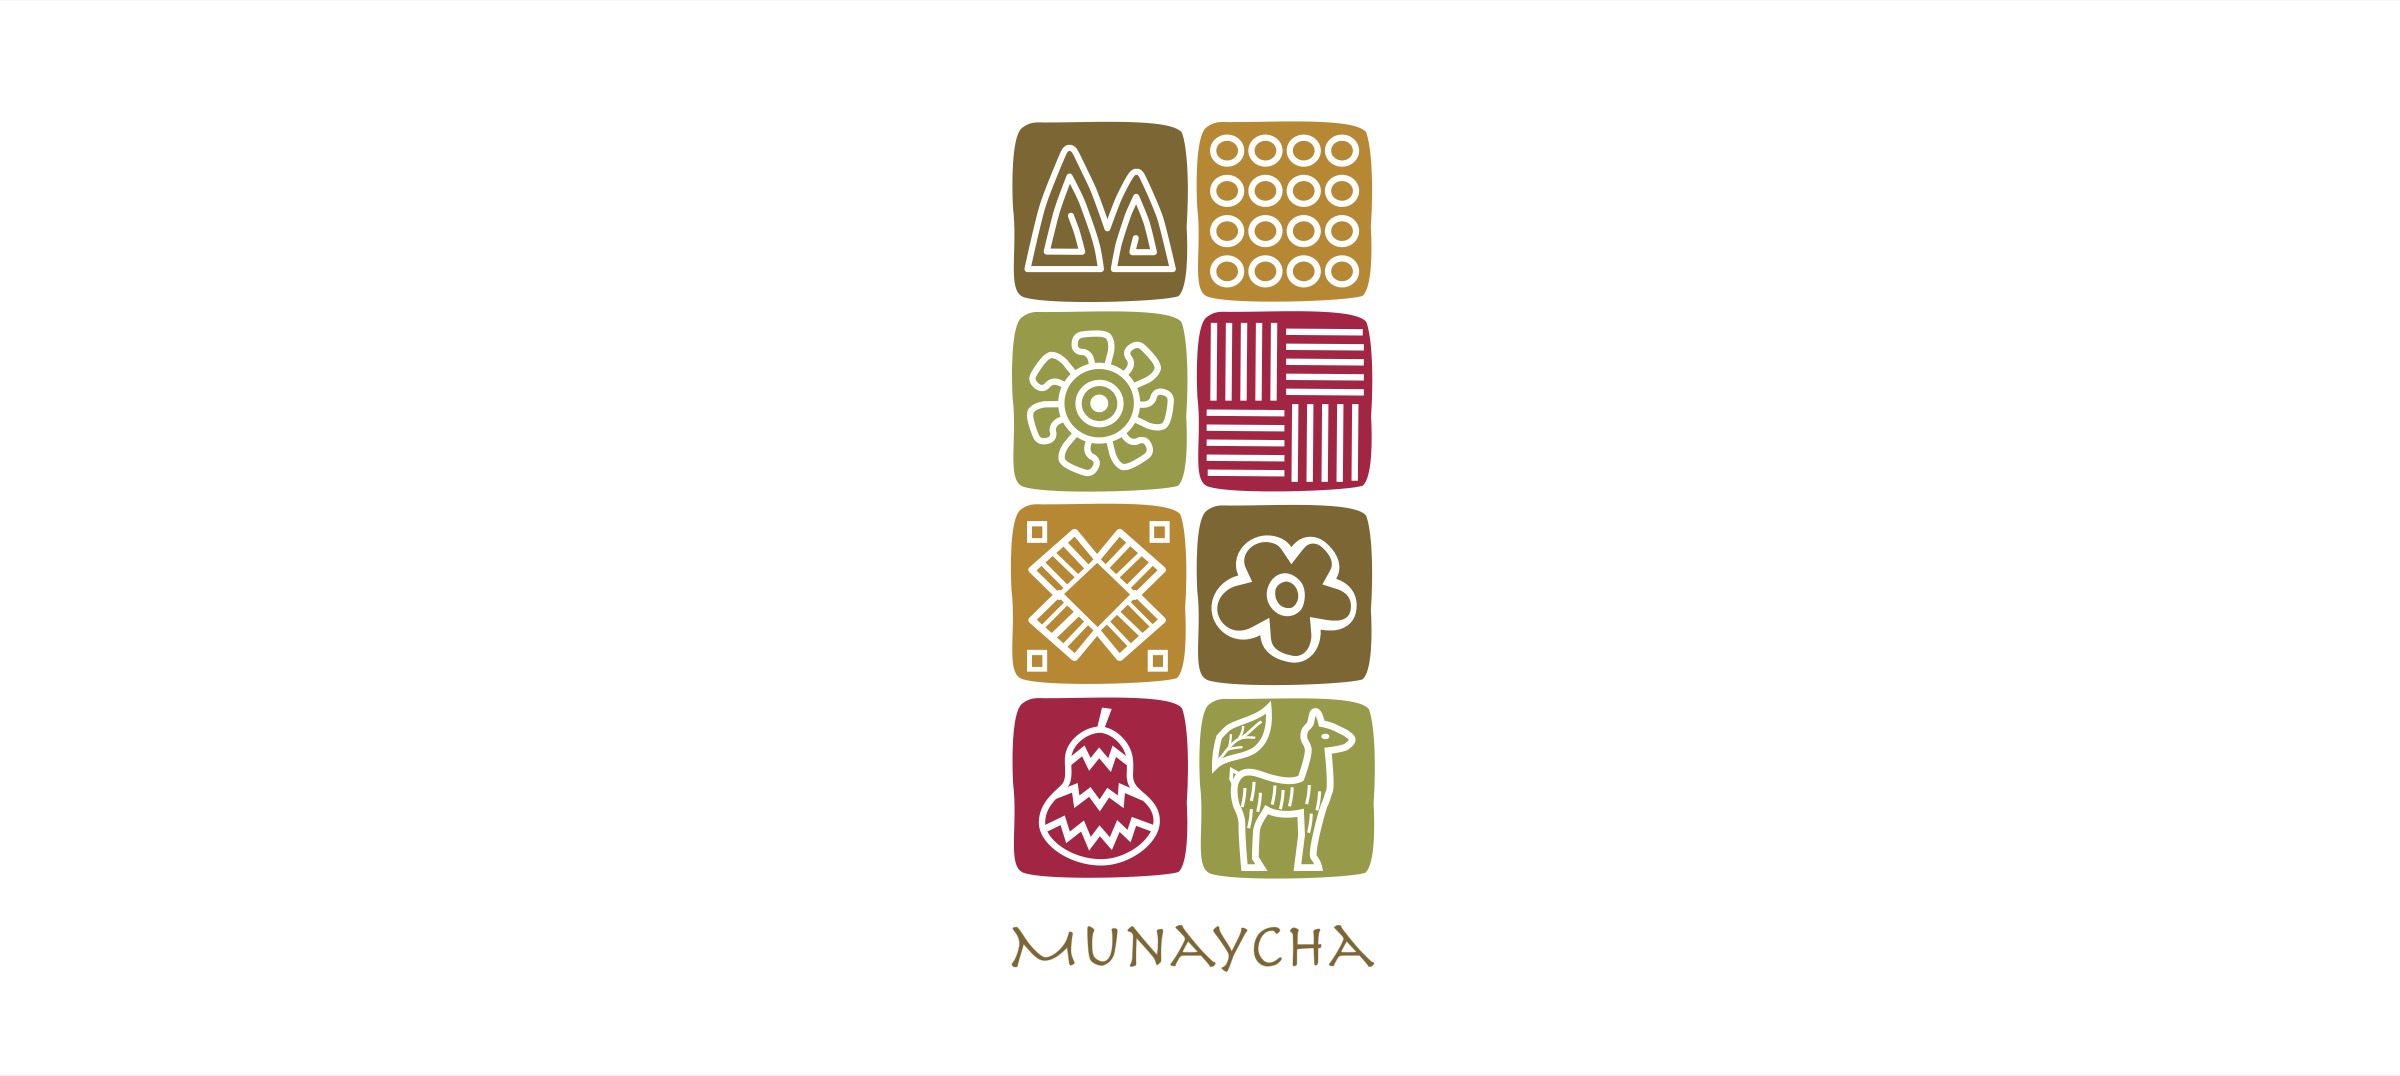 Munaycha